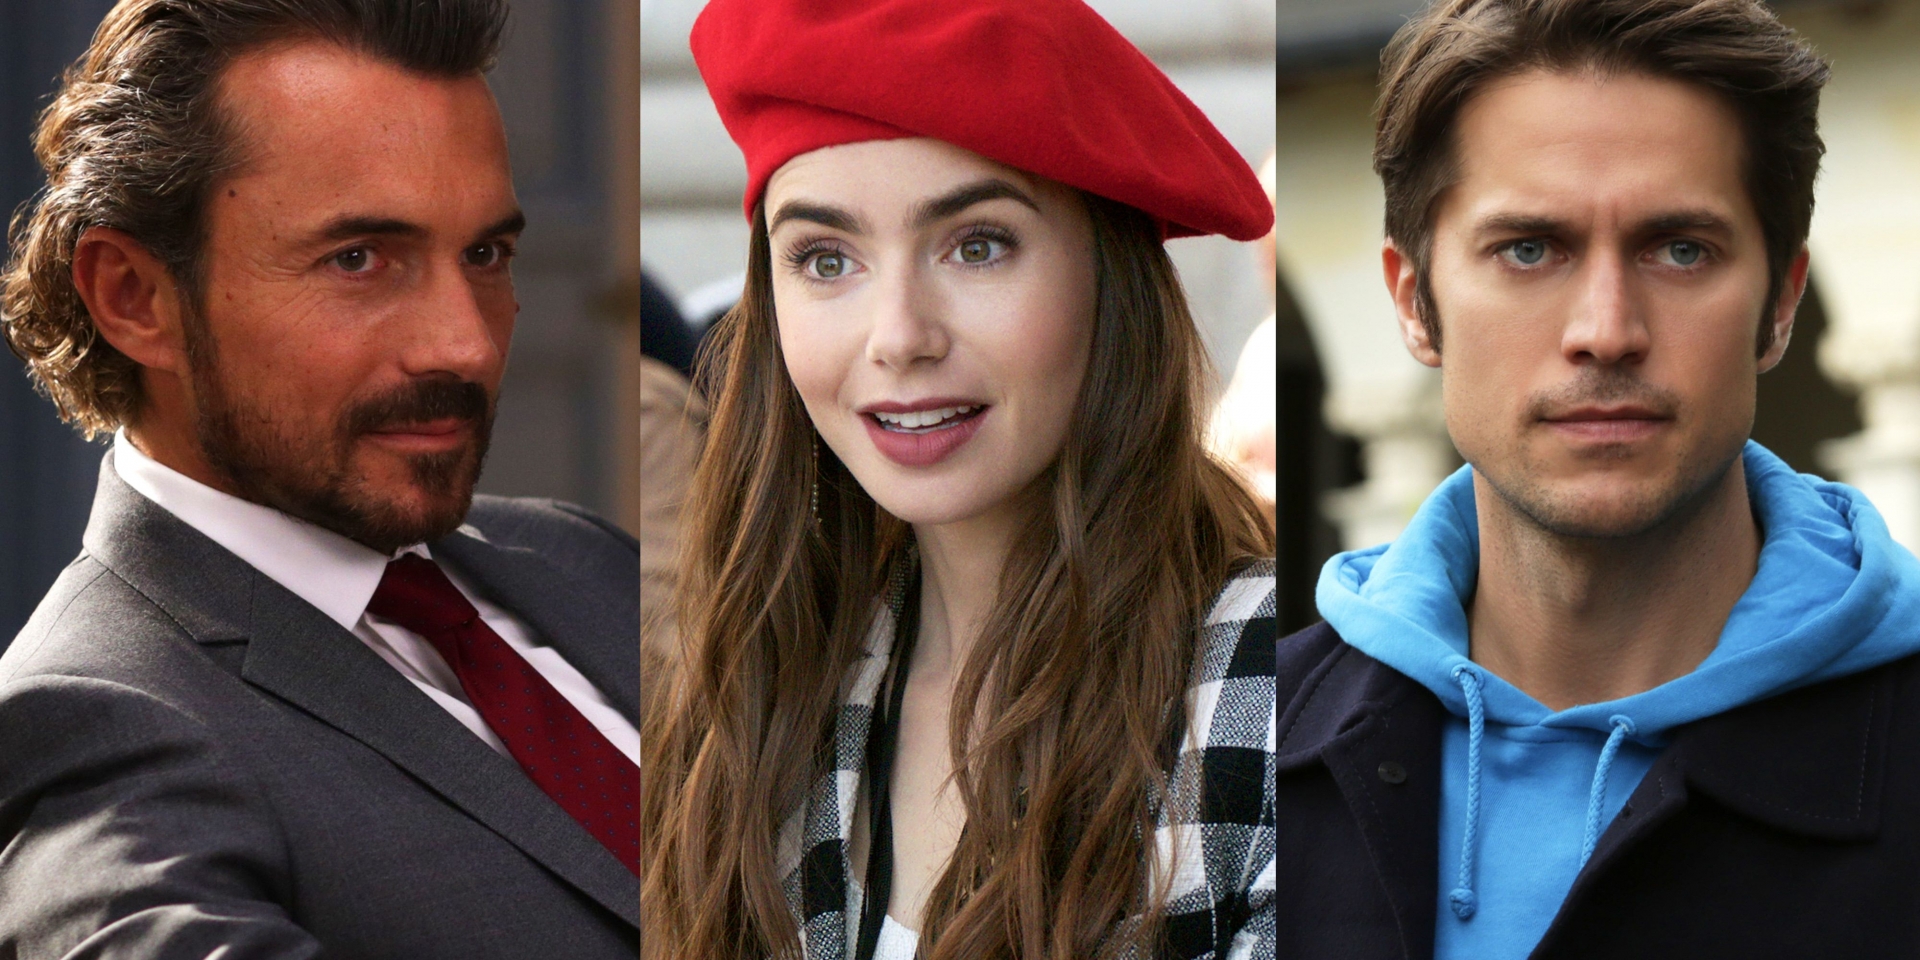 'Emily in Paris' Season 2: Netflix Release Date, Cast, Plot and More